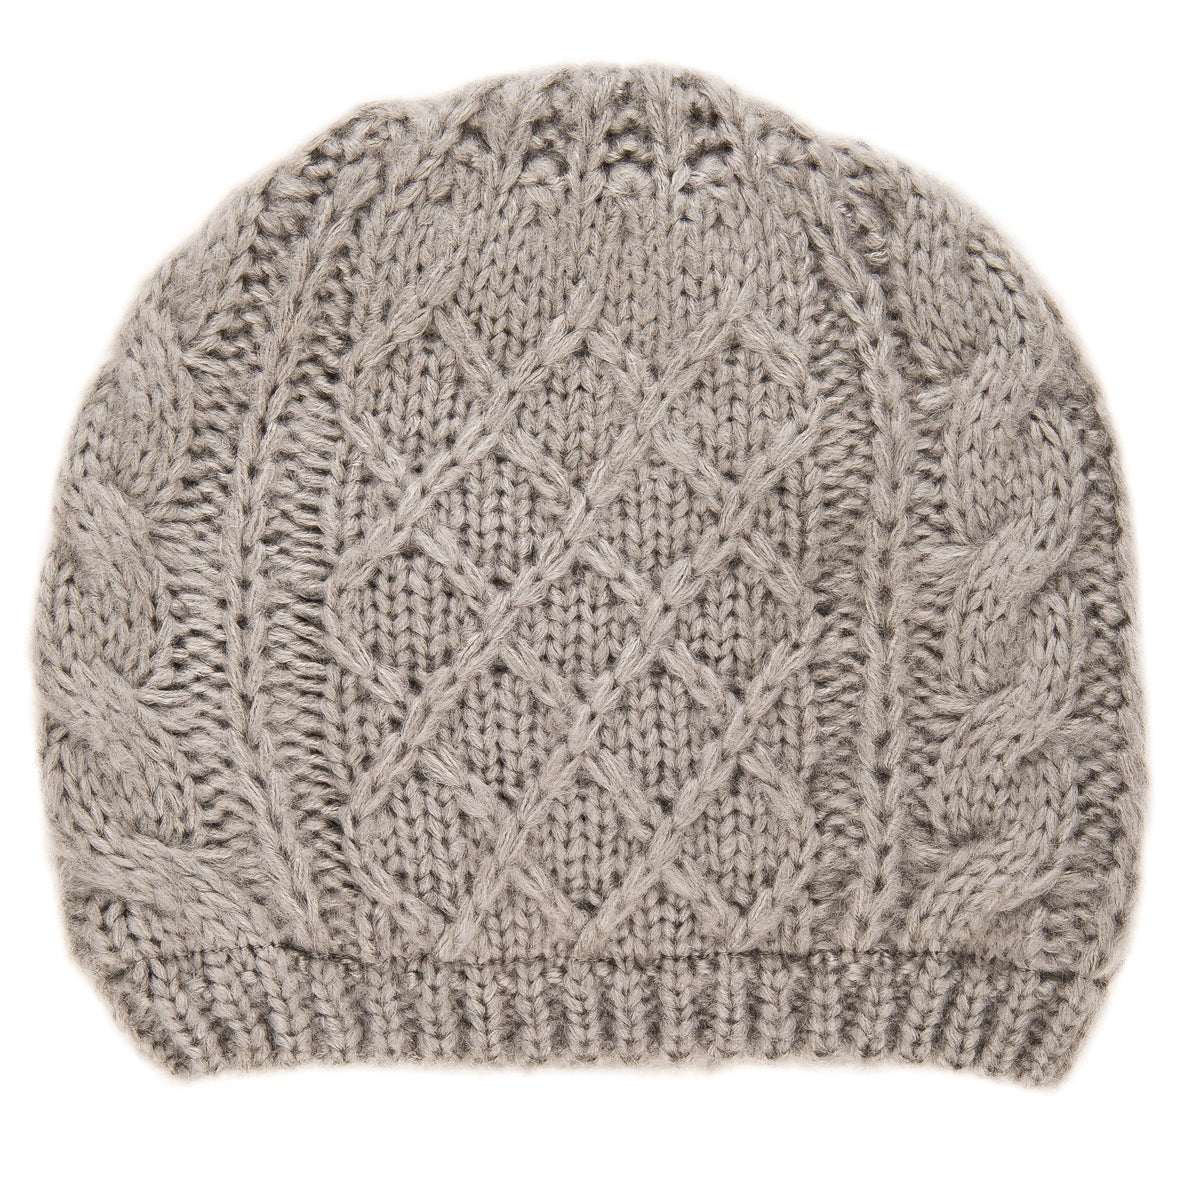 Men's Super-Soft Cable Knit Avalanche Winter Hat - Grey